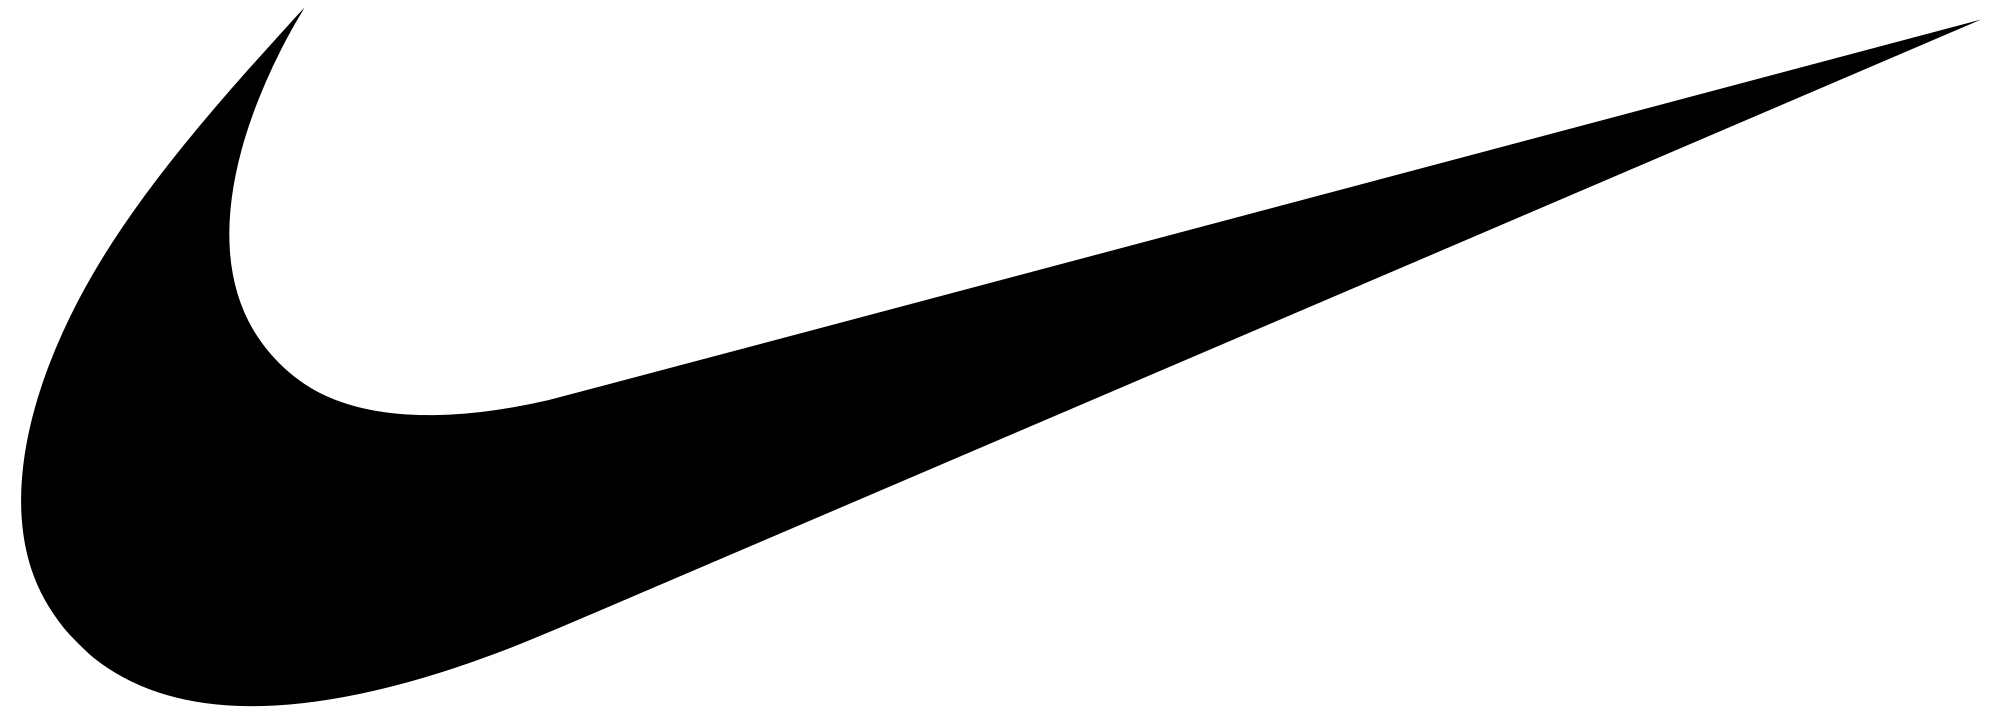 Nike Swoosh Logo PNG Transparent Background, Free Download #49339